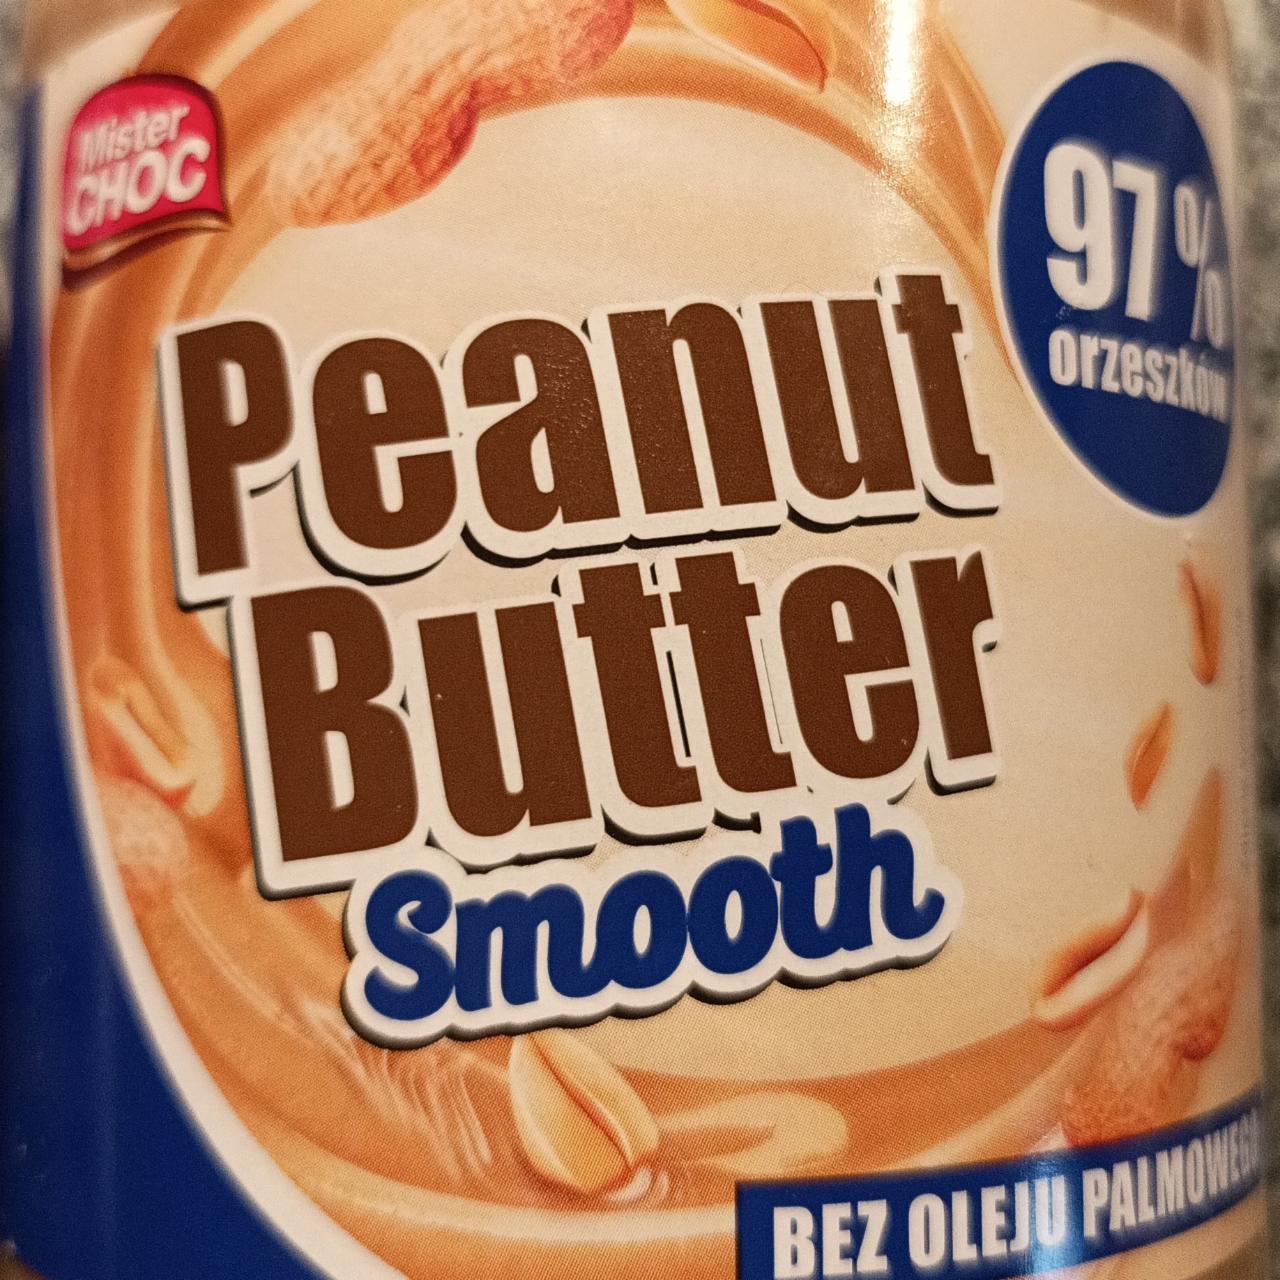 Фото - Арахісова паста Peanut Butter Smooth Mister Choc